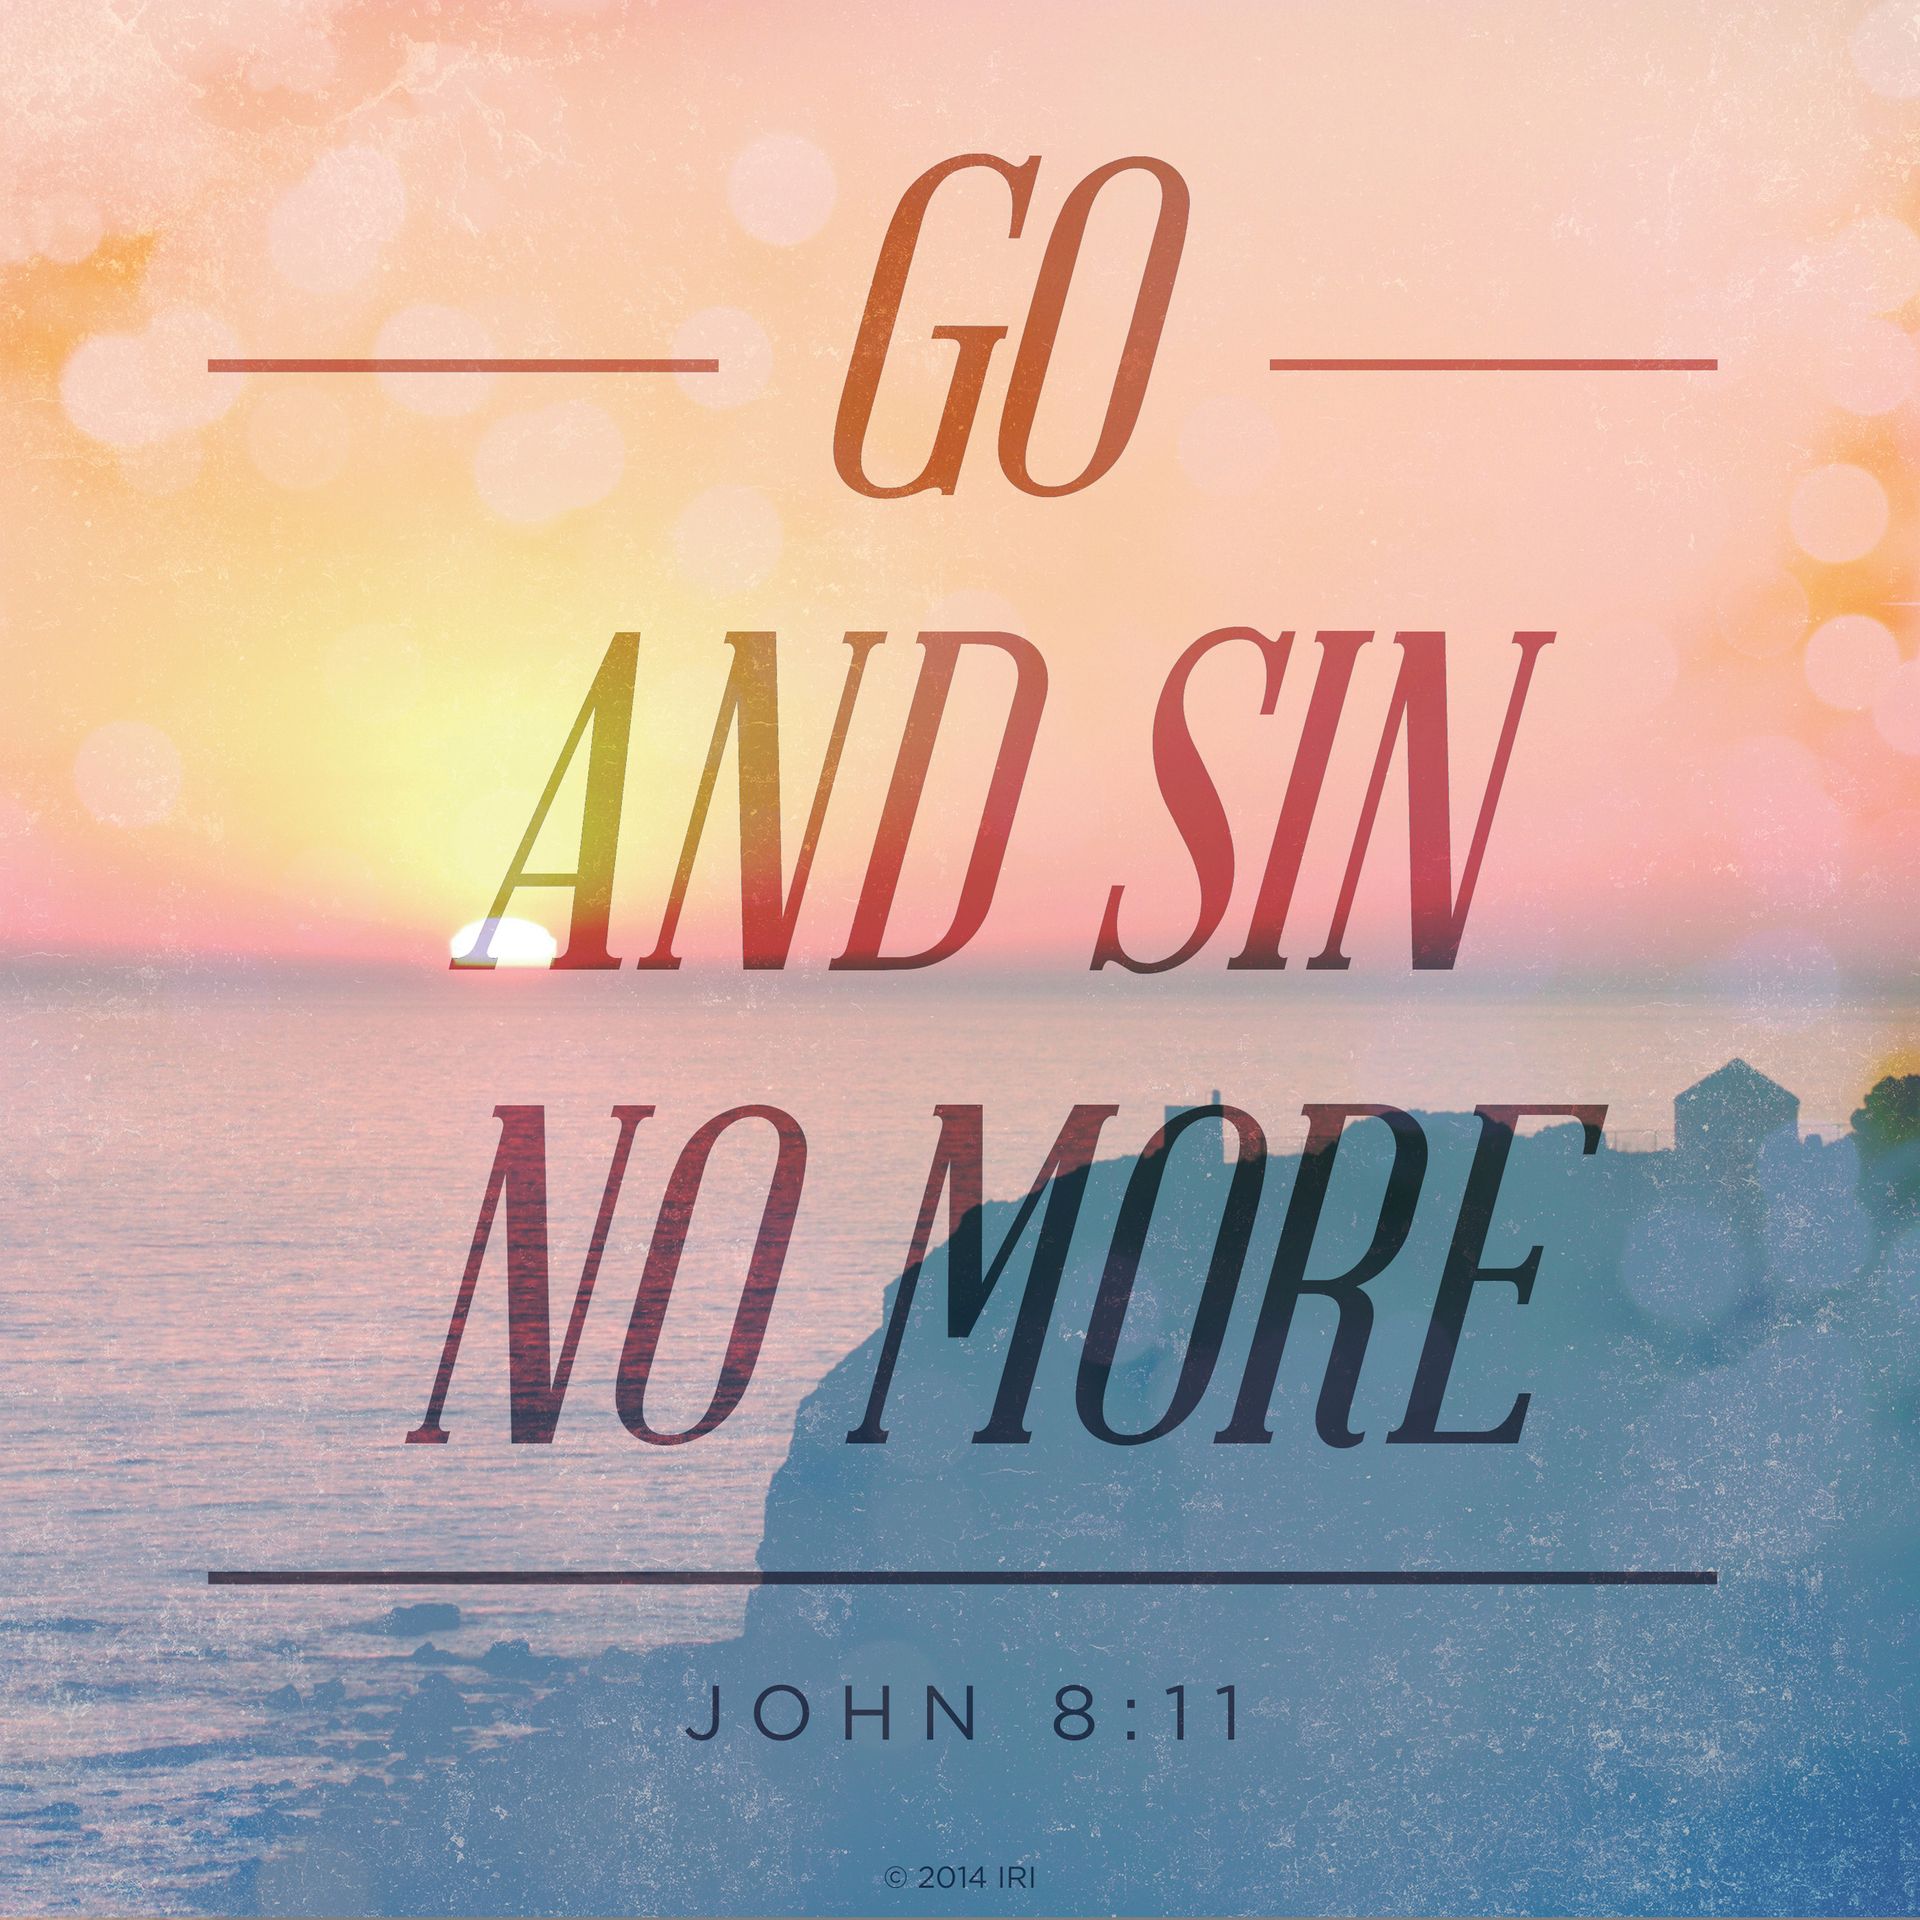 “Go, and sin no more.”—John 8:11